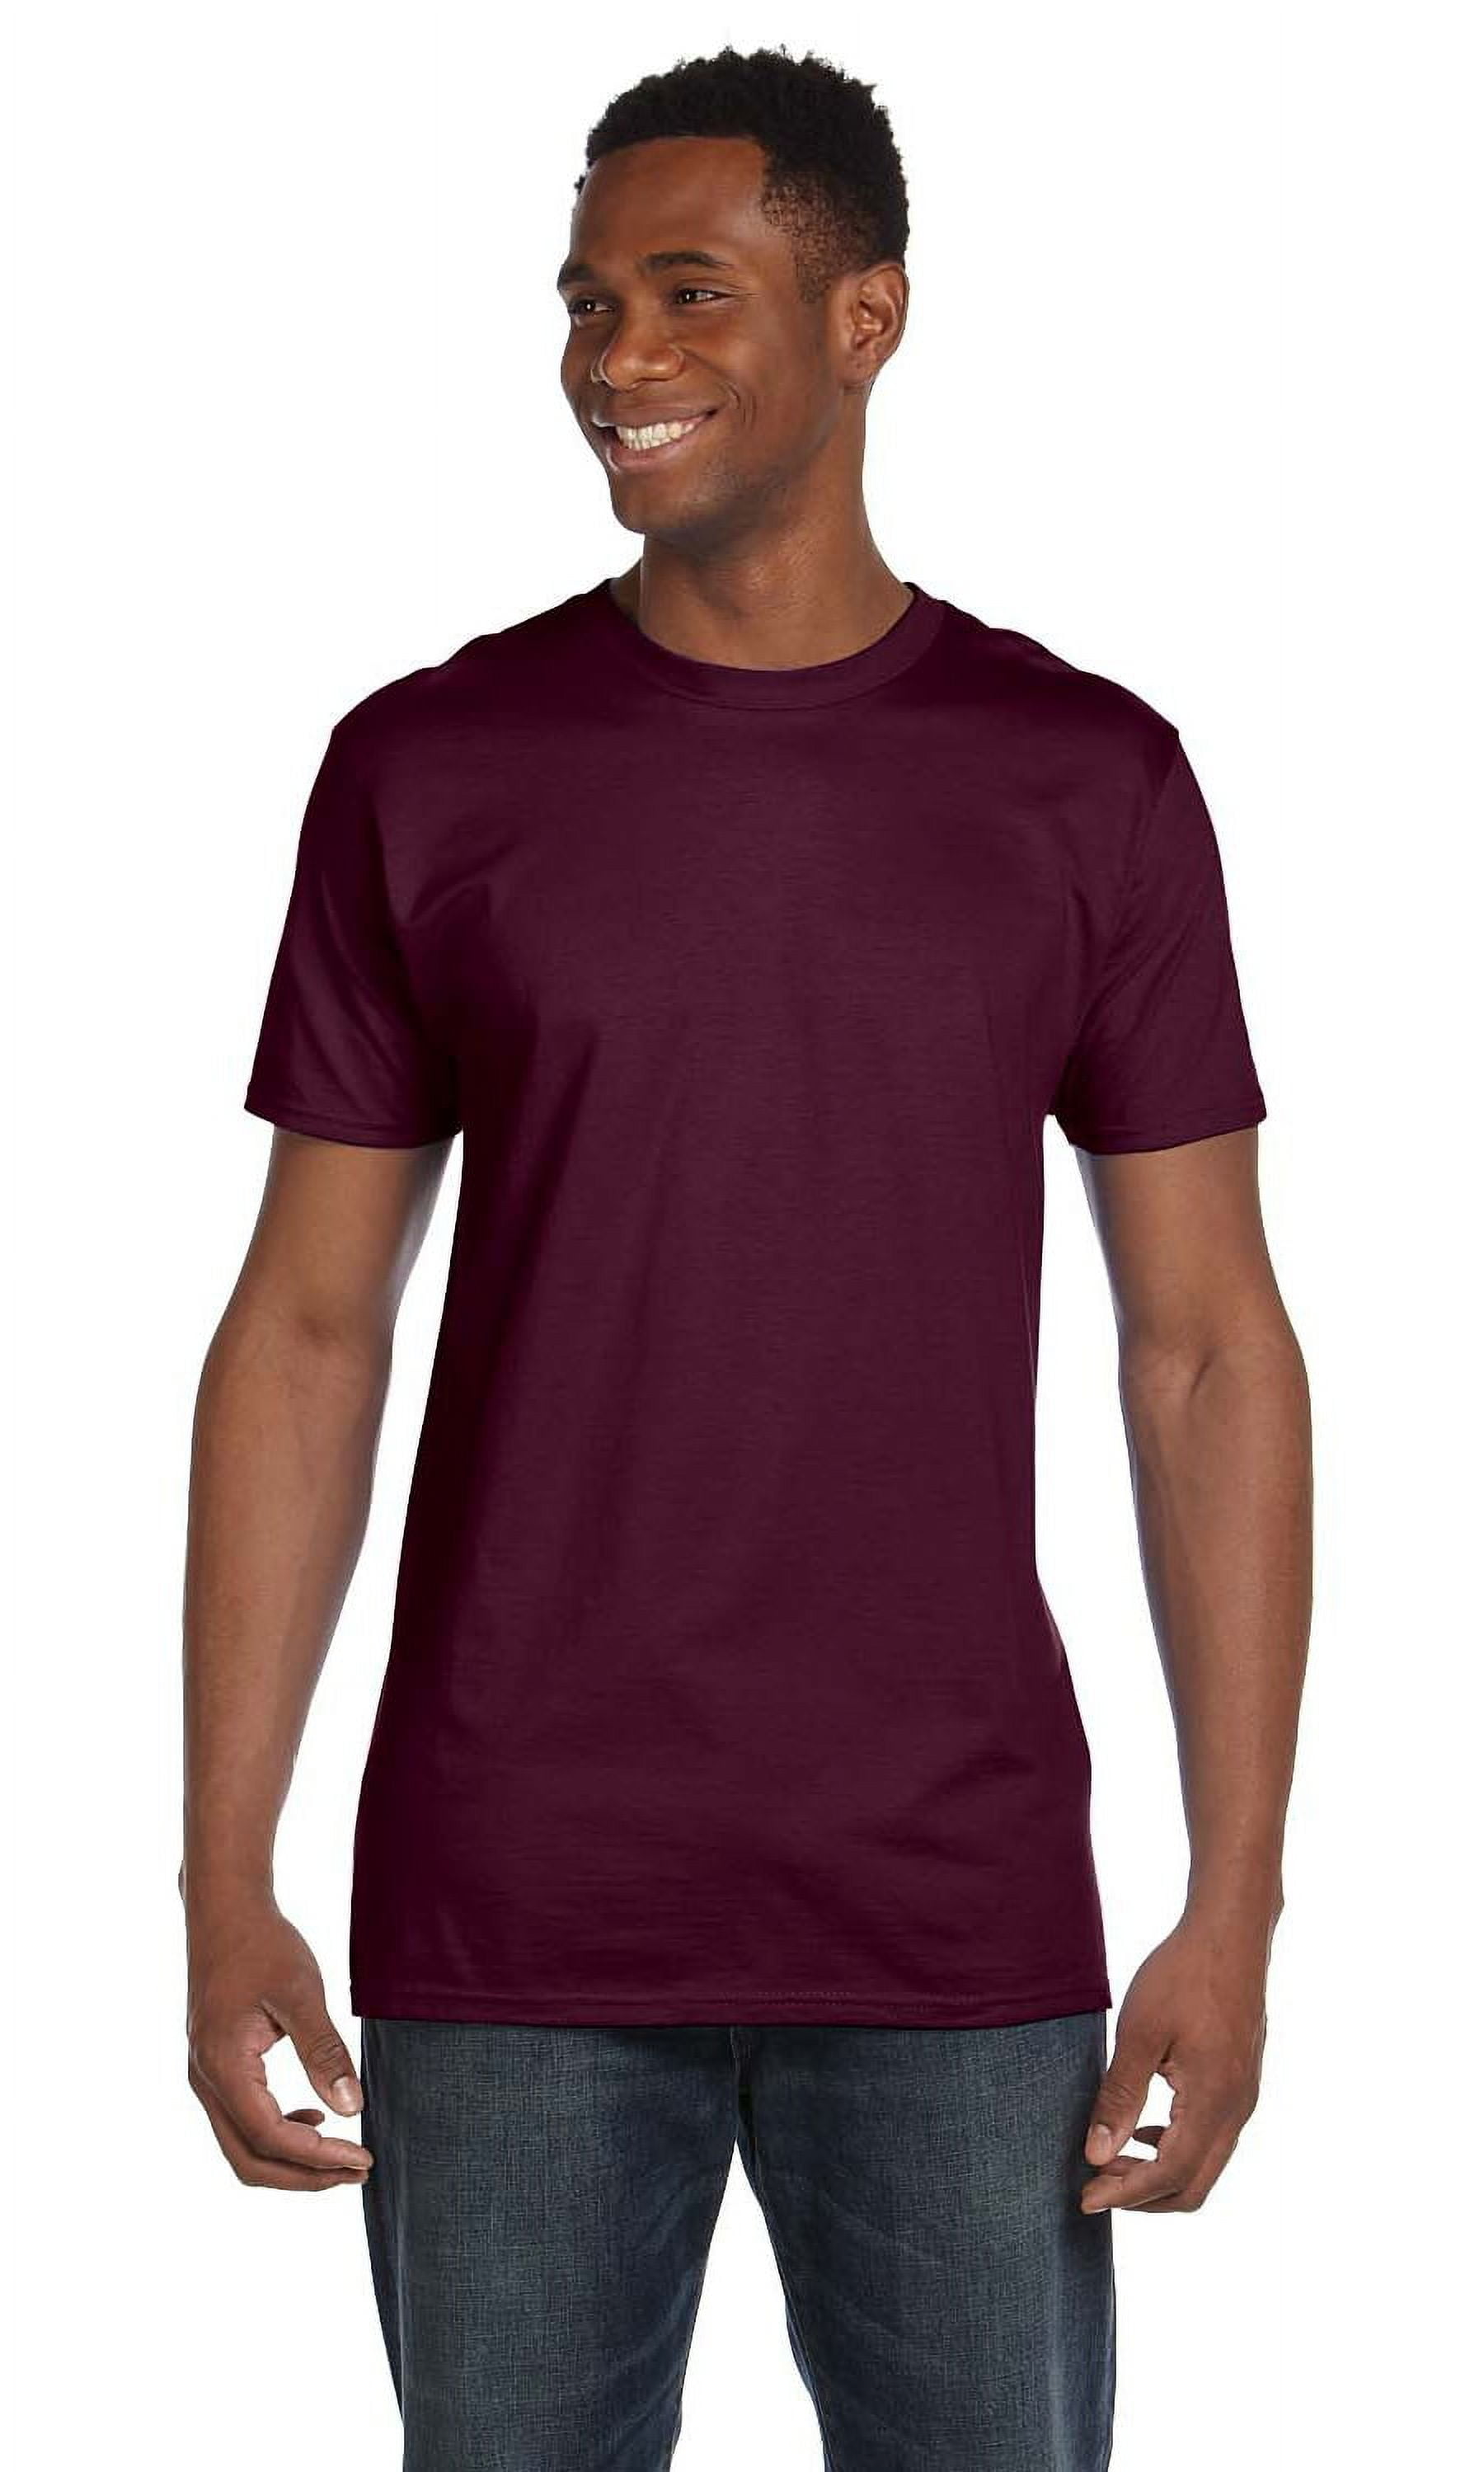 Hanes Perfect-T Men's Long Sleeve Cotton T-Shirt, 2-Pack